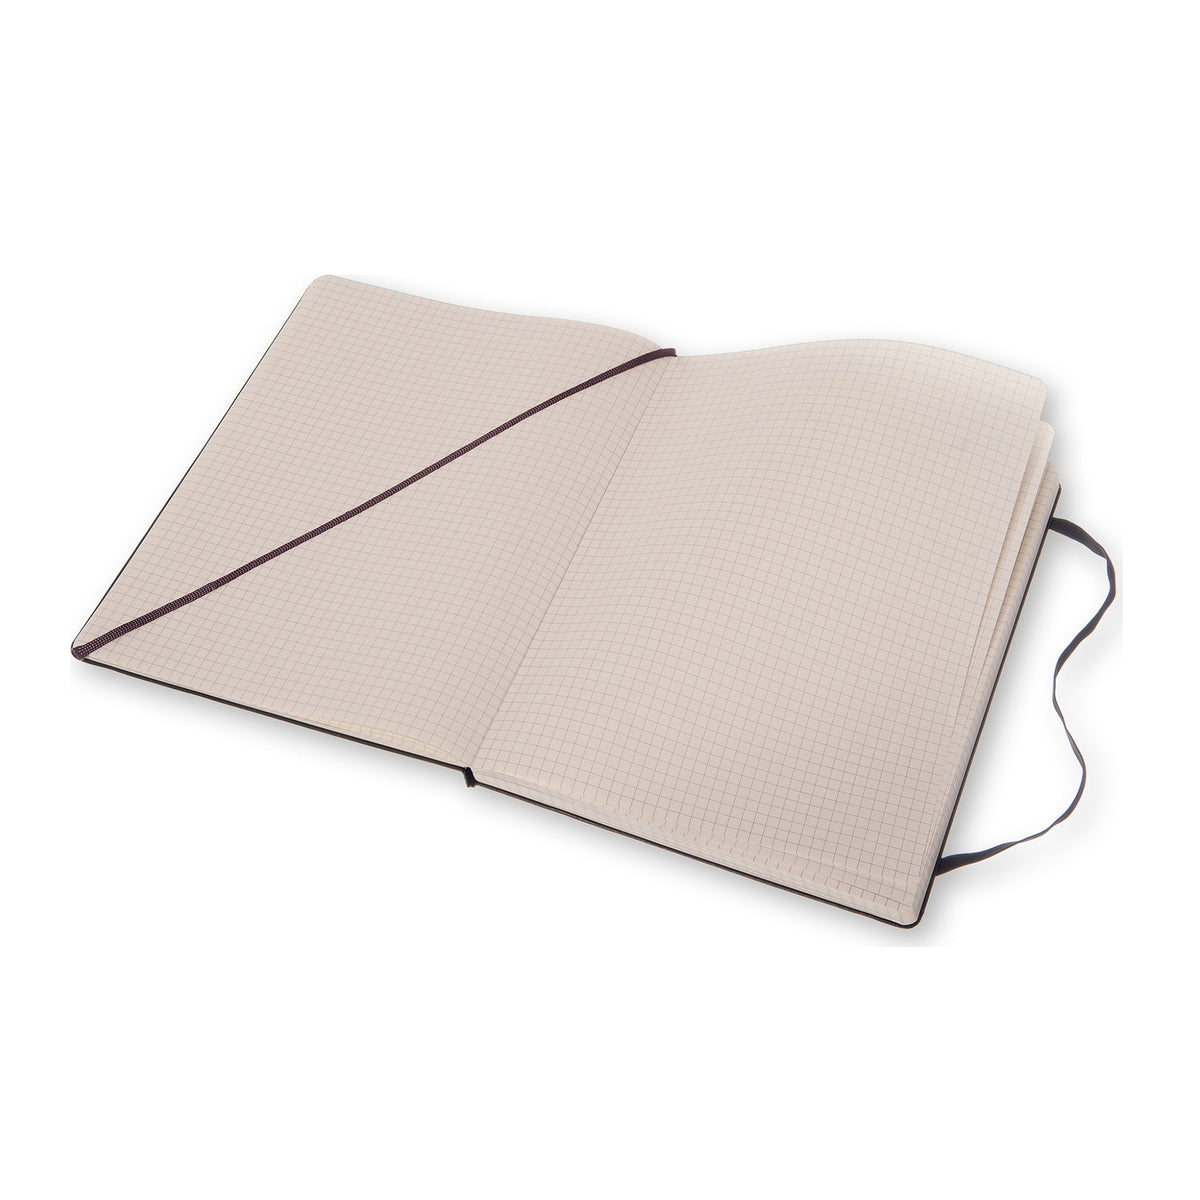 Moleskine - Classic Hard Cover Notebook - Grid - Extra Large - Black